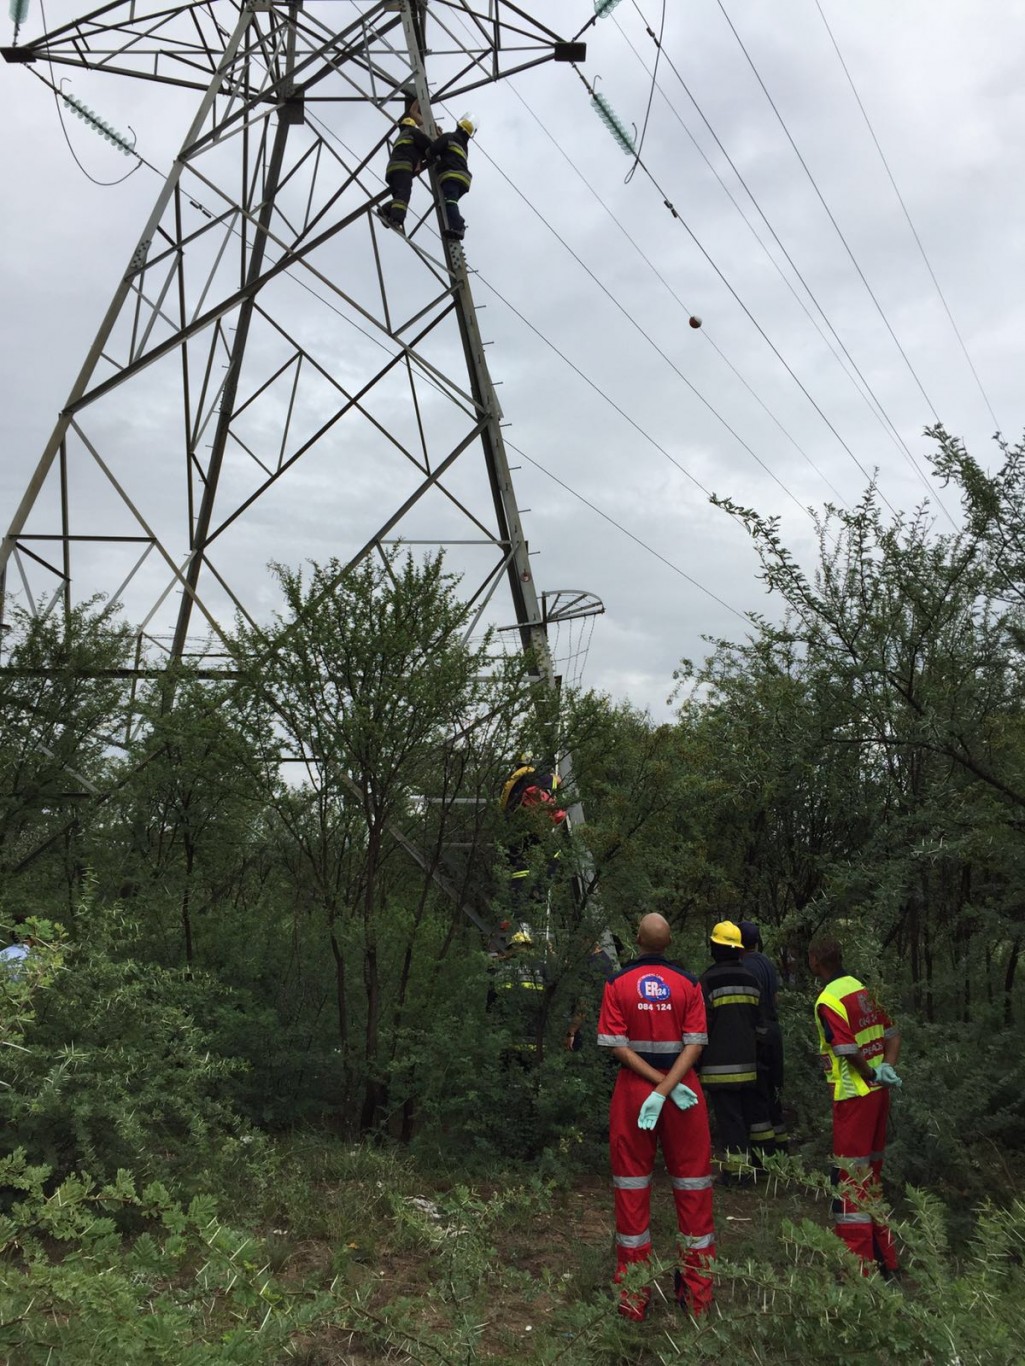 Man rescued off electrical pylon, Bloemfontein